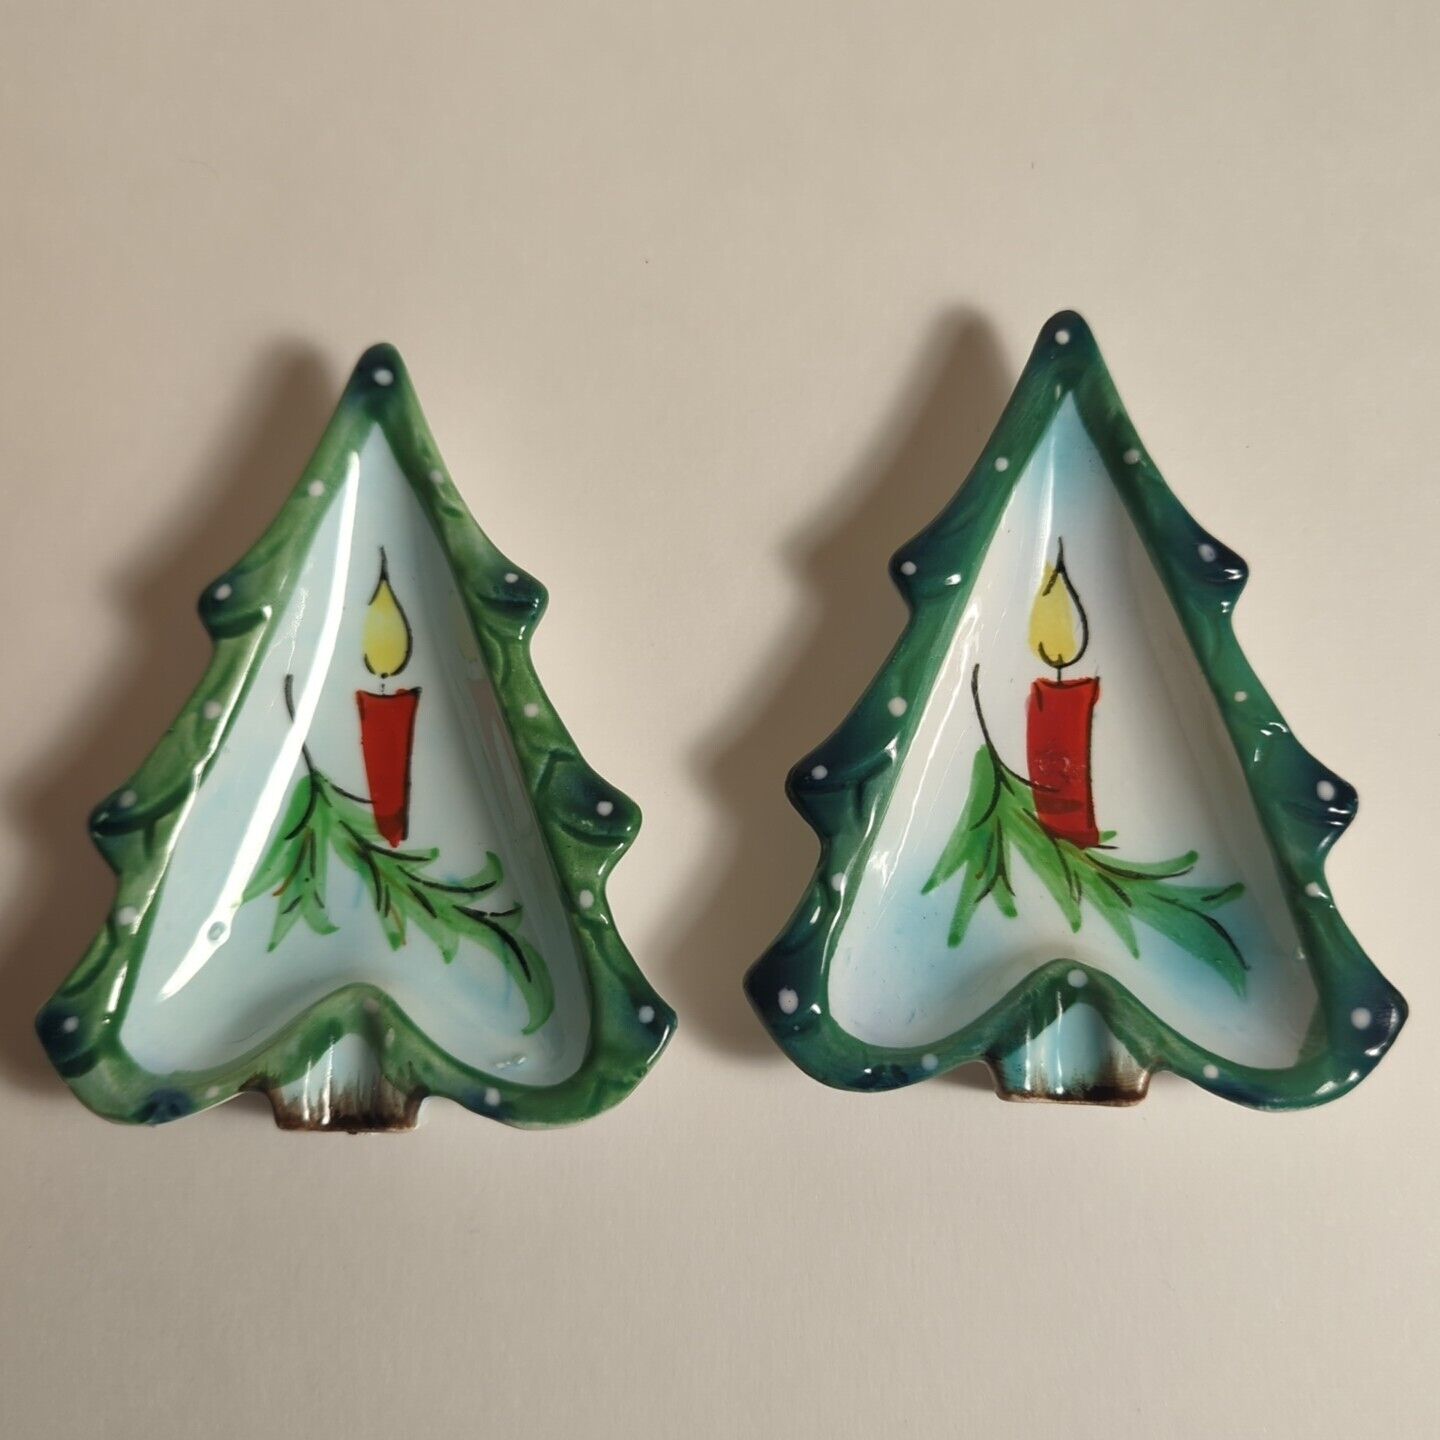 TWO Vintage HOLT HOWARD 1959 Christmas Tree Ceramic Trinket Dish Ashtray KITSCHY